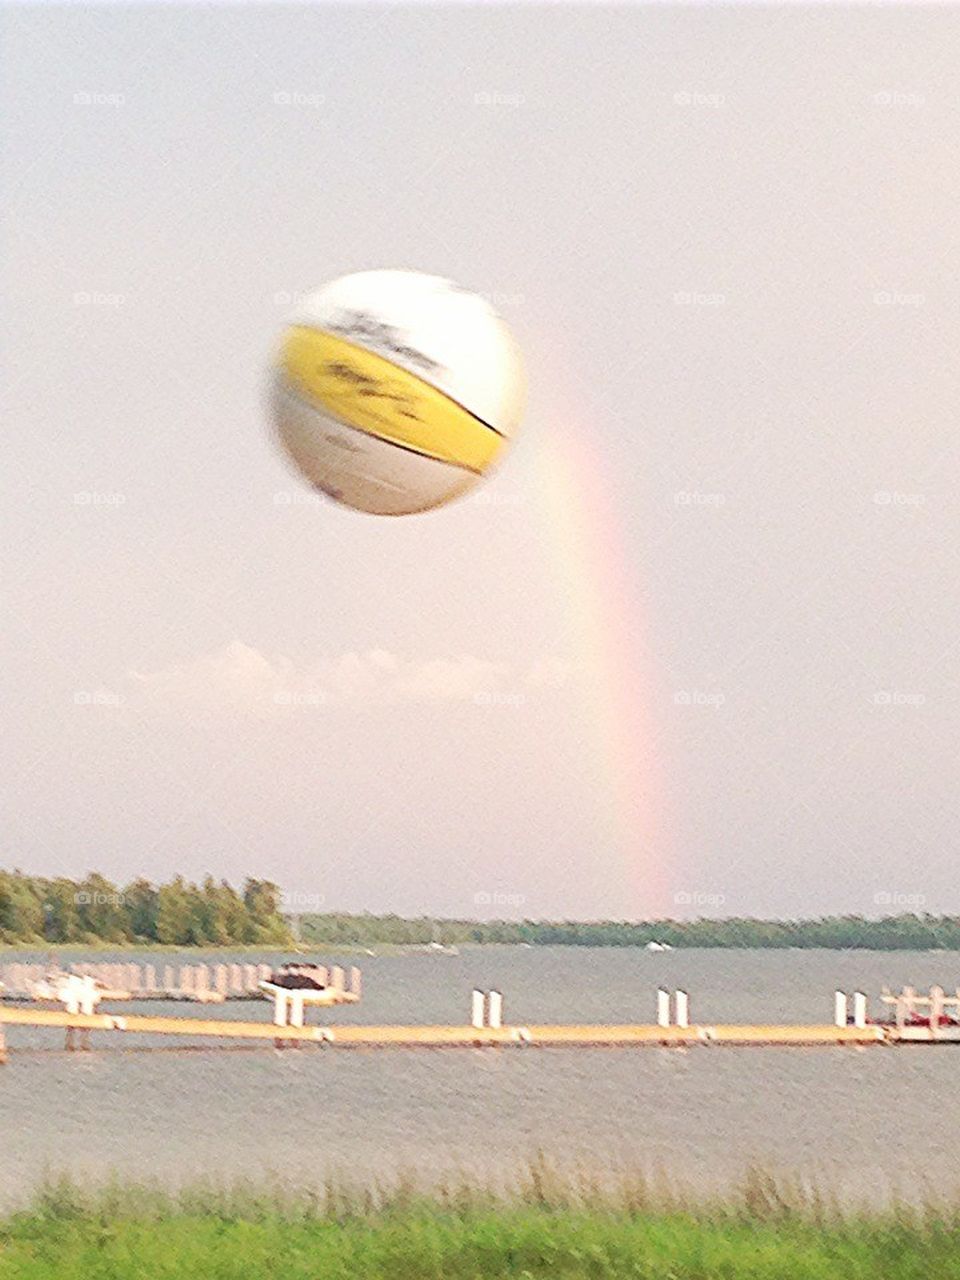 Volleyball rainbow